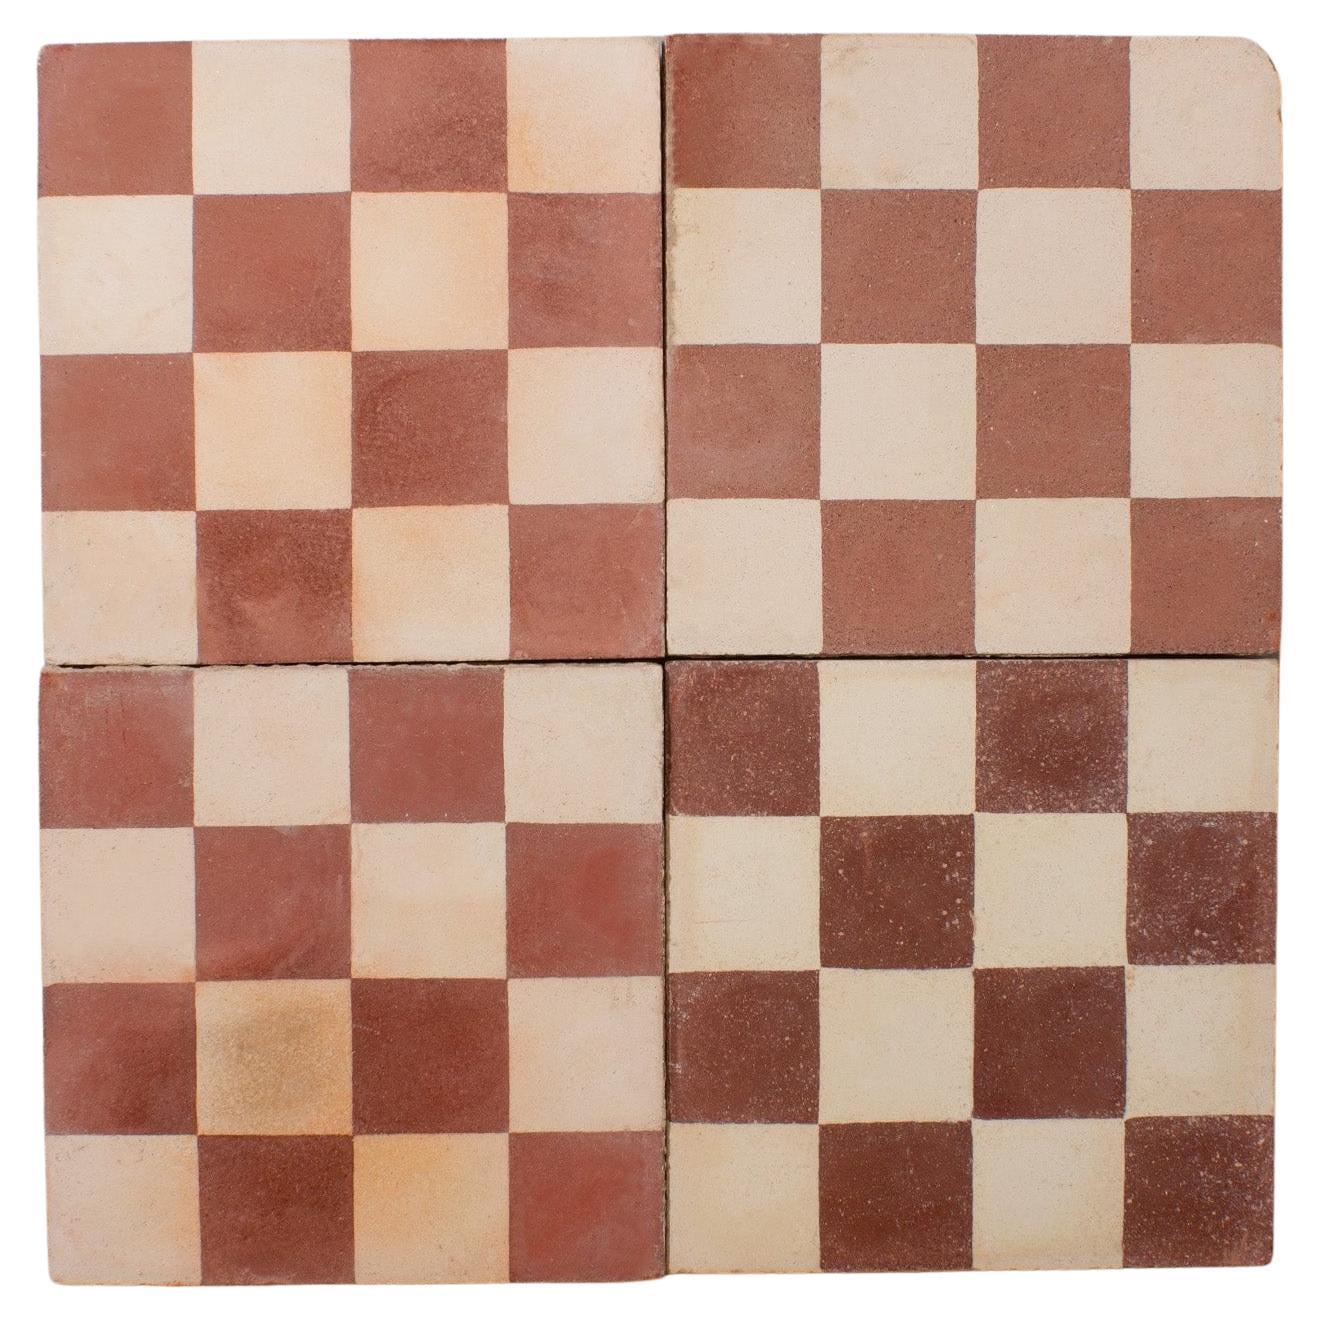 Bert & May - Chequerboard Reclaimed Tiles 8m2 Lot (86sqft)